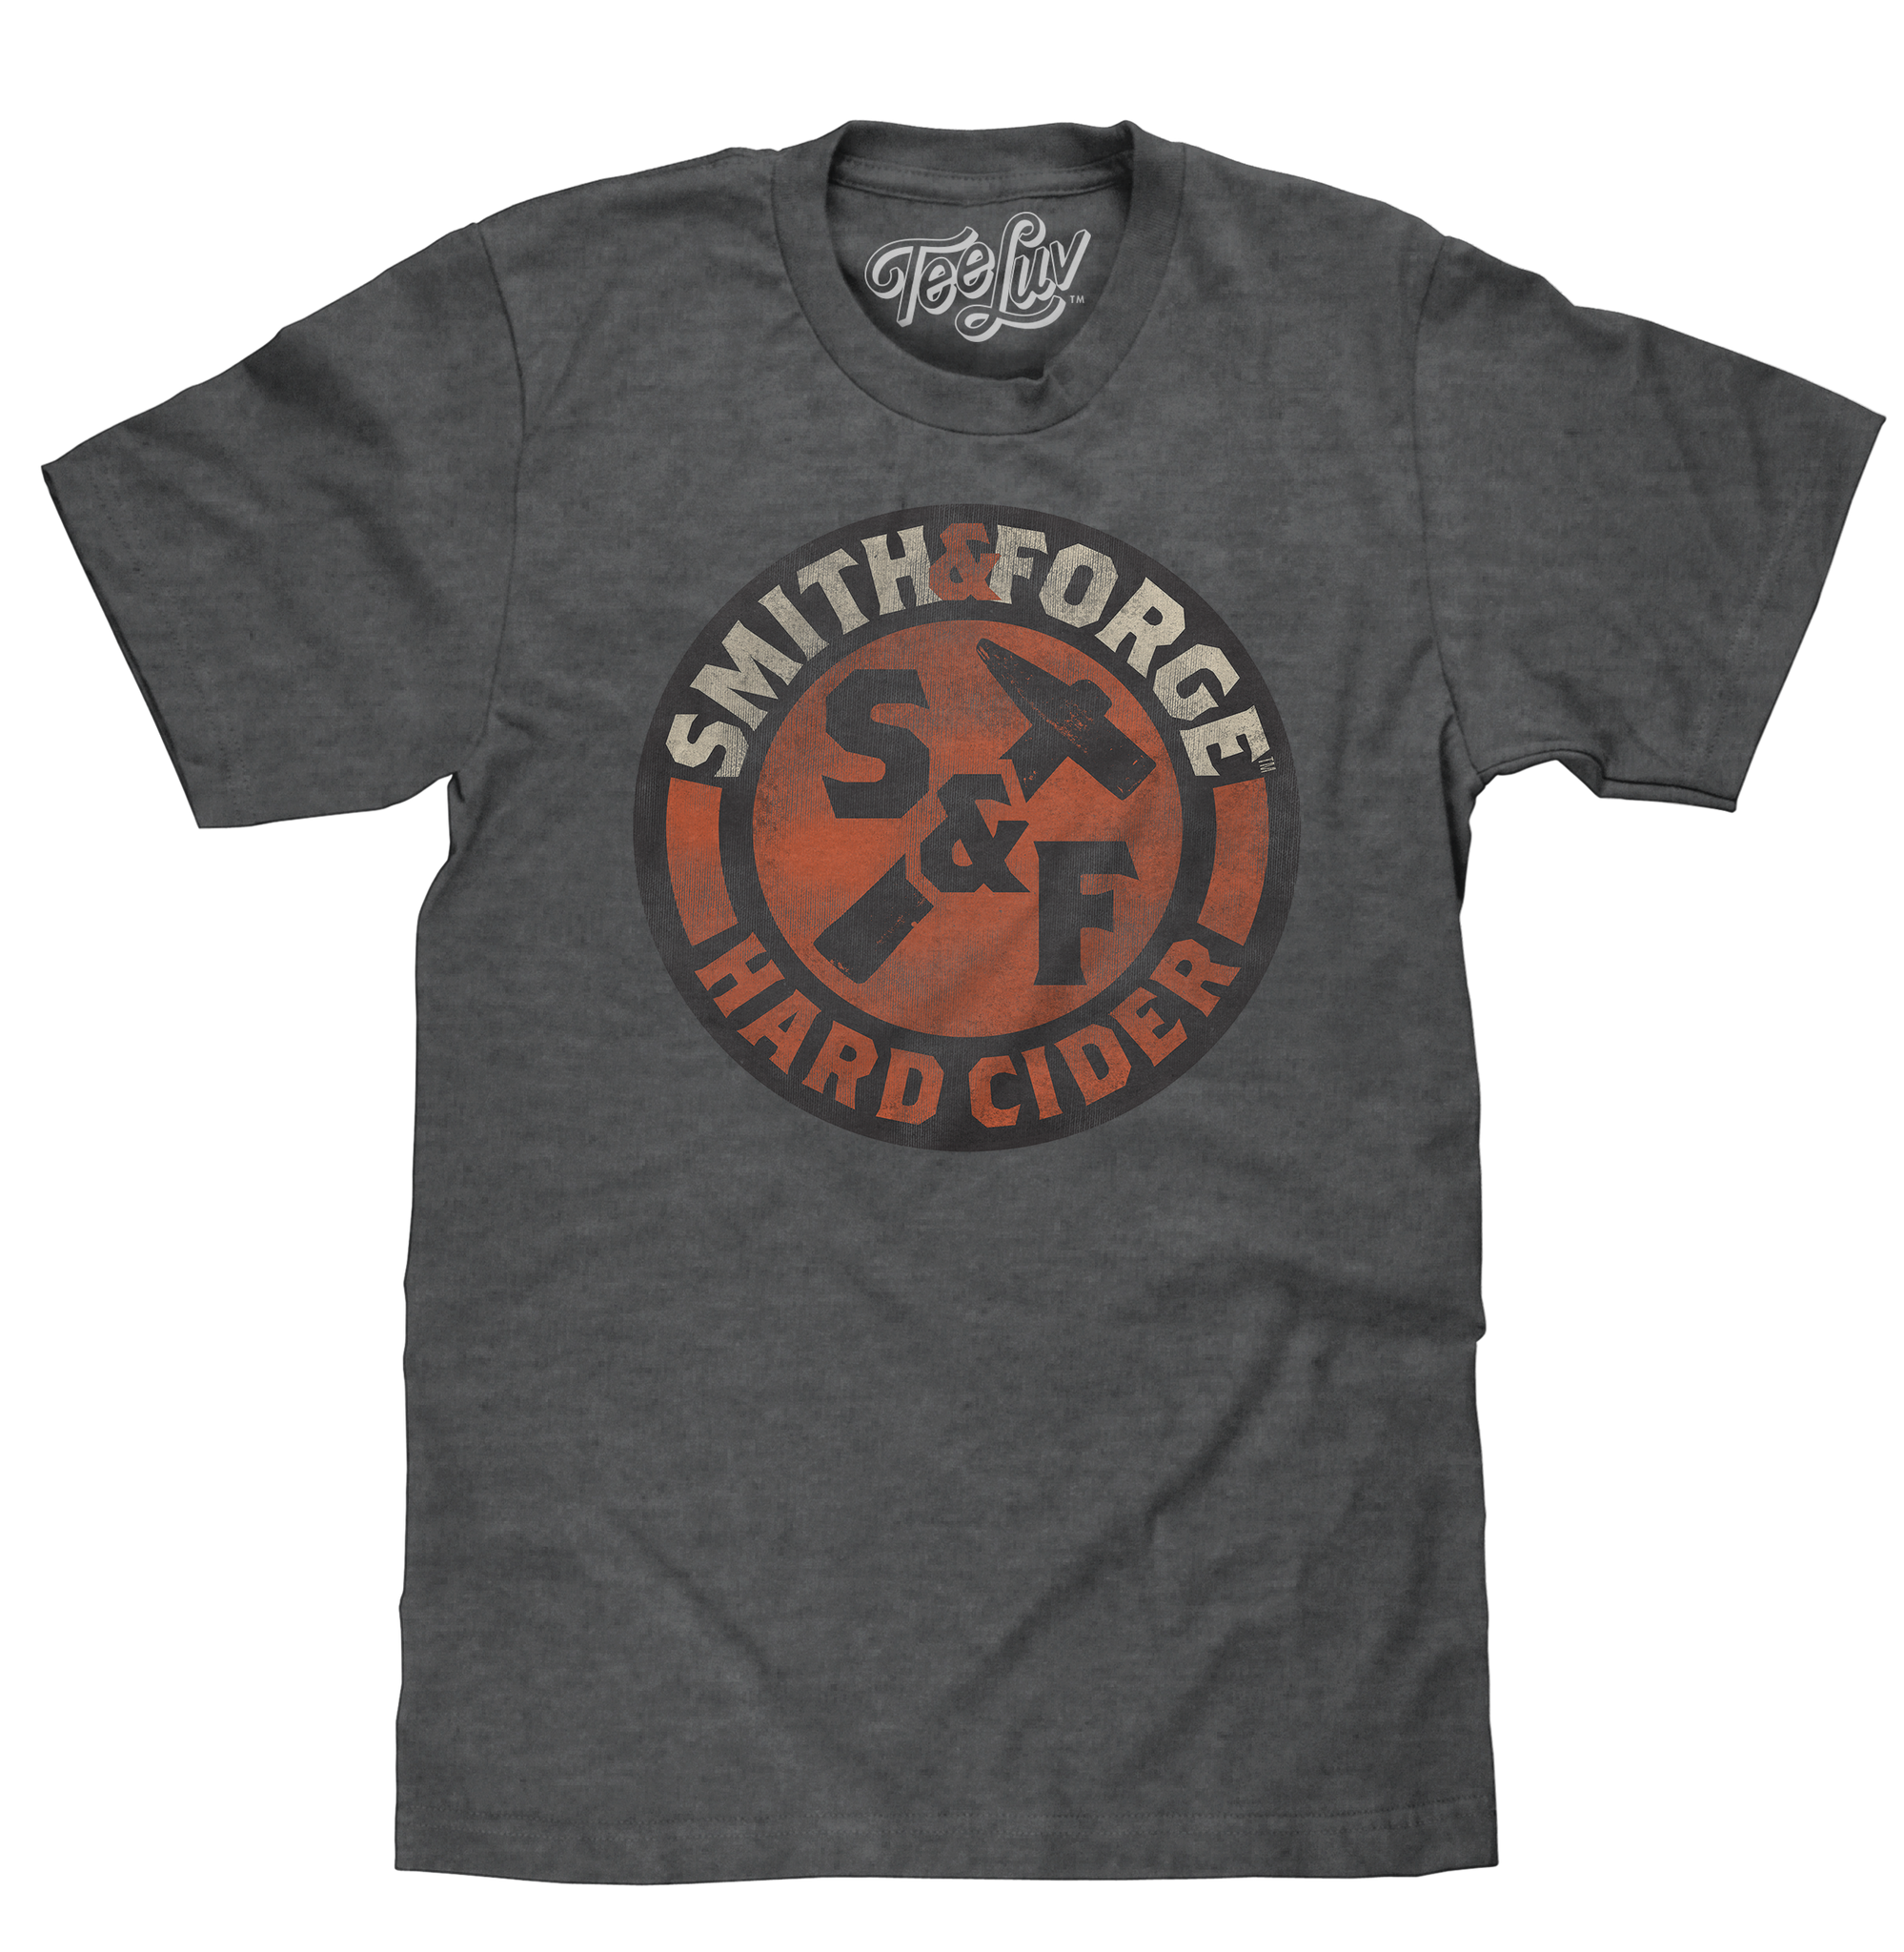 Smith & Forge Hard Cider Logo T-Shirt - Gray – Tee Luv